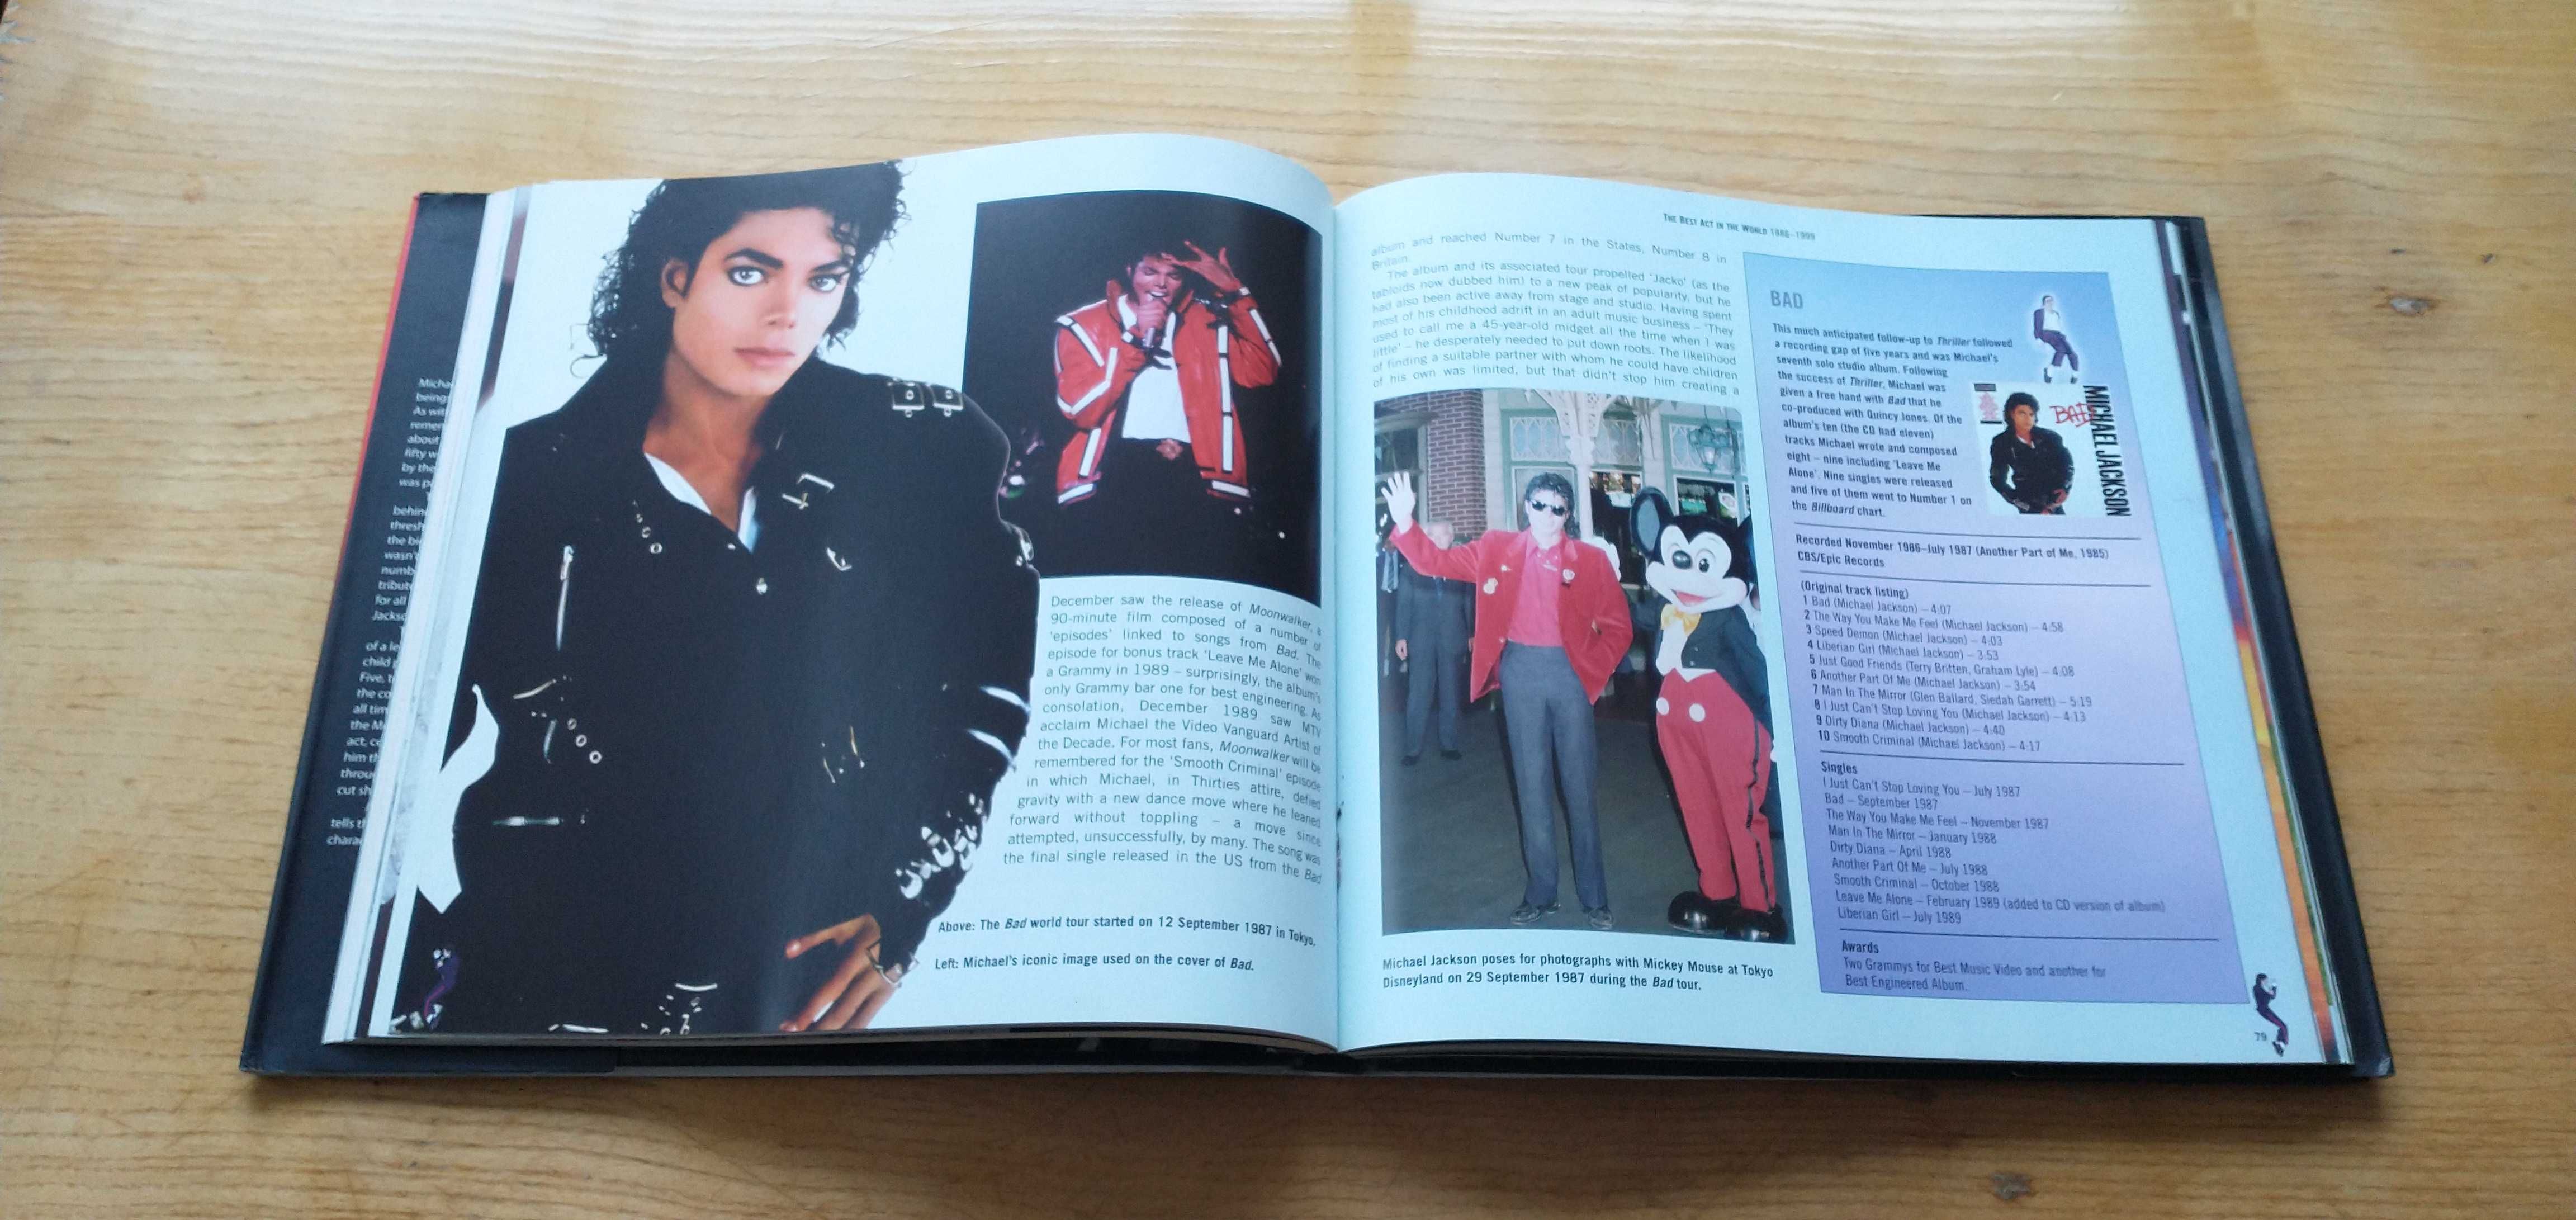 Vand album foto Michael Jackson - Life of a Legend 1958-2009 Hardcover